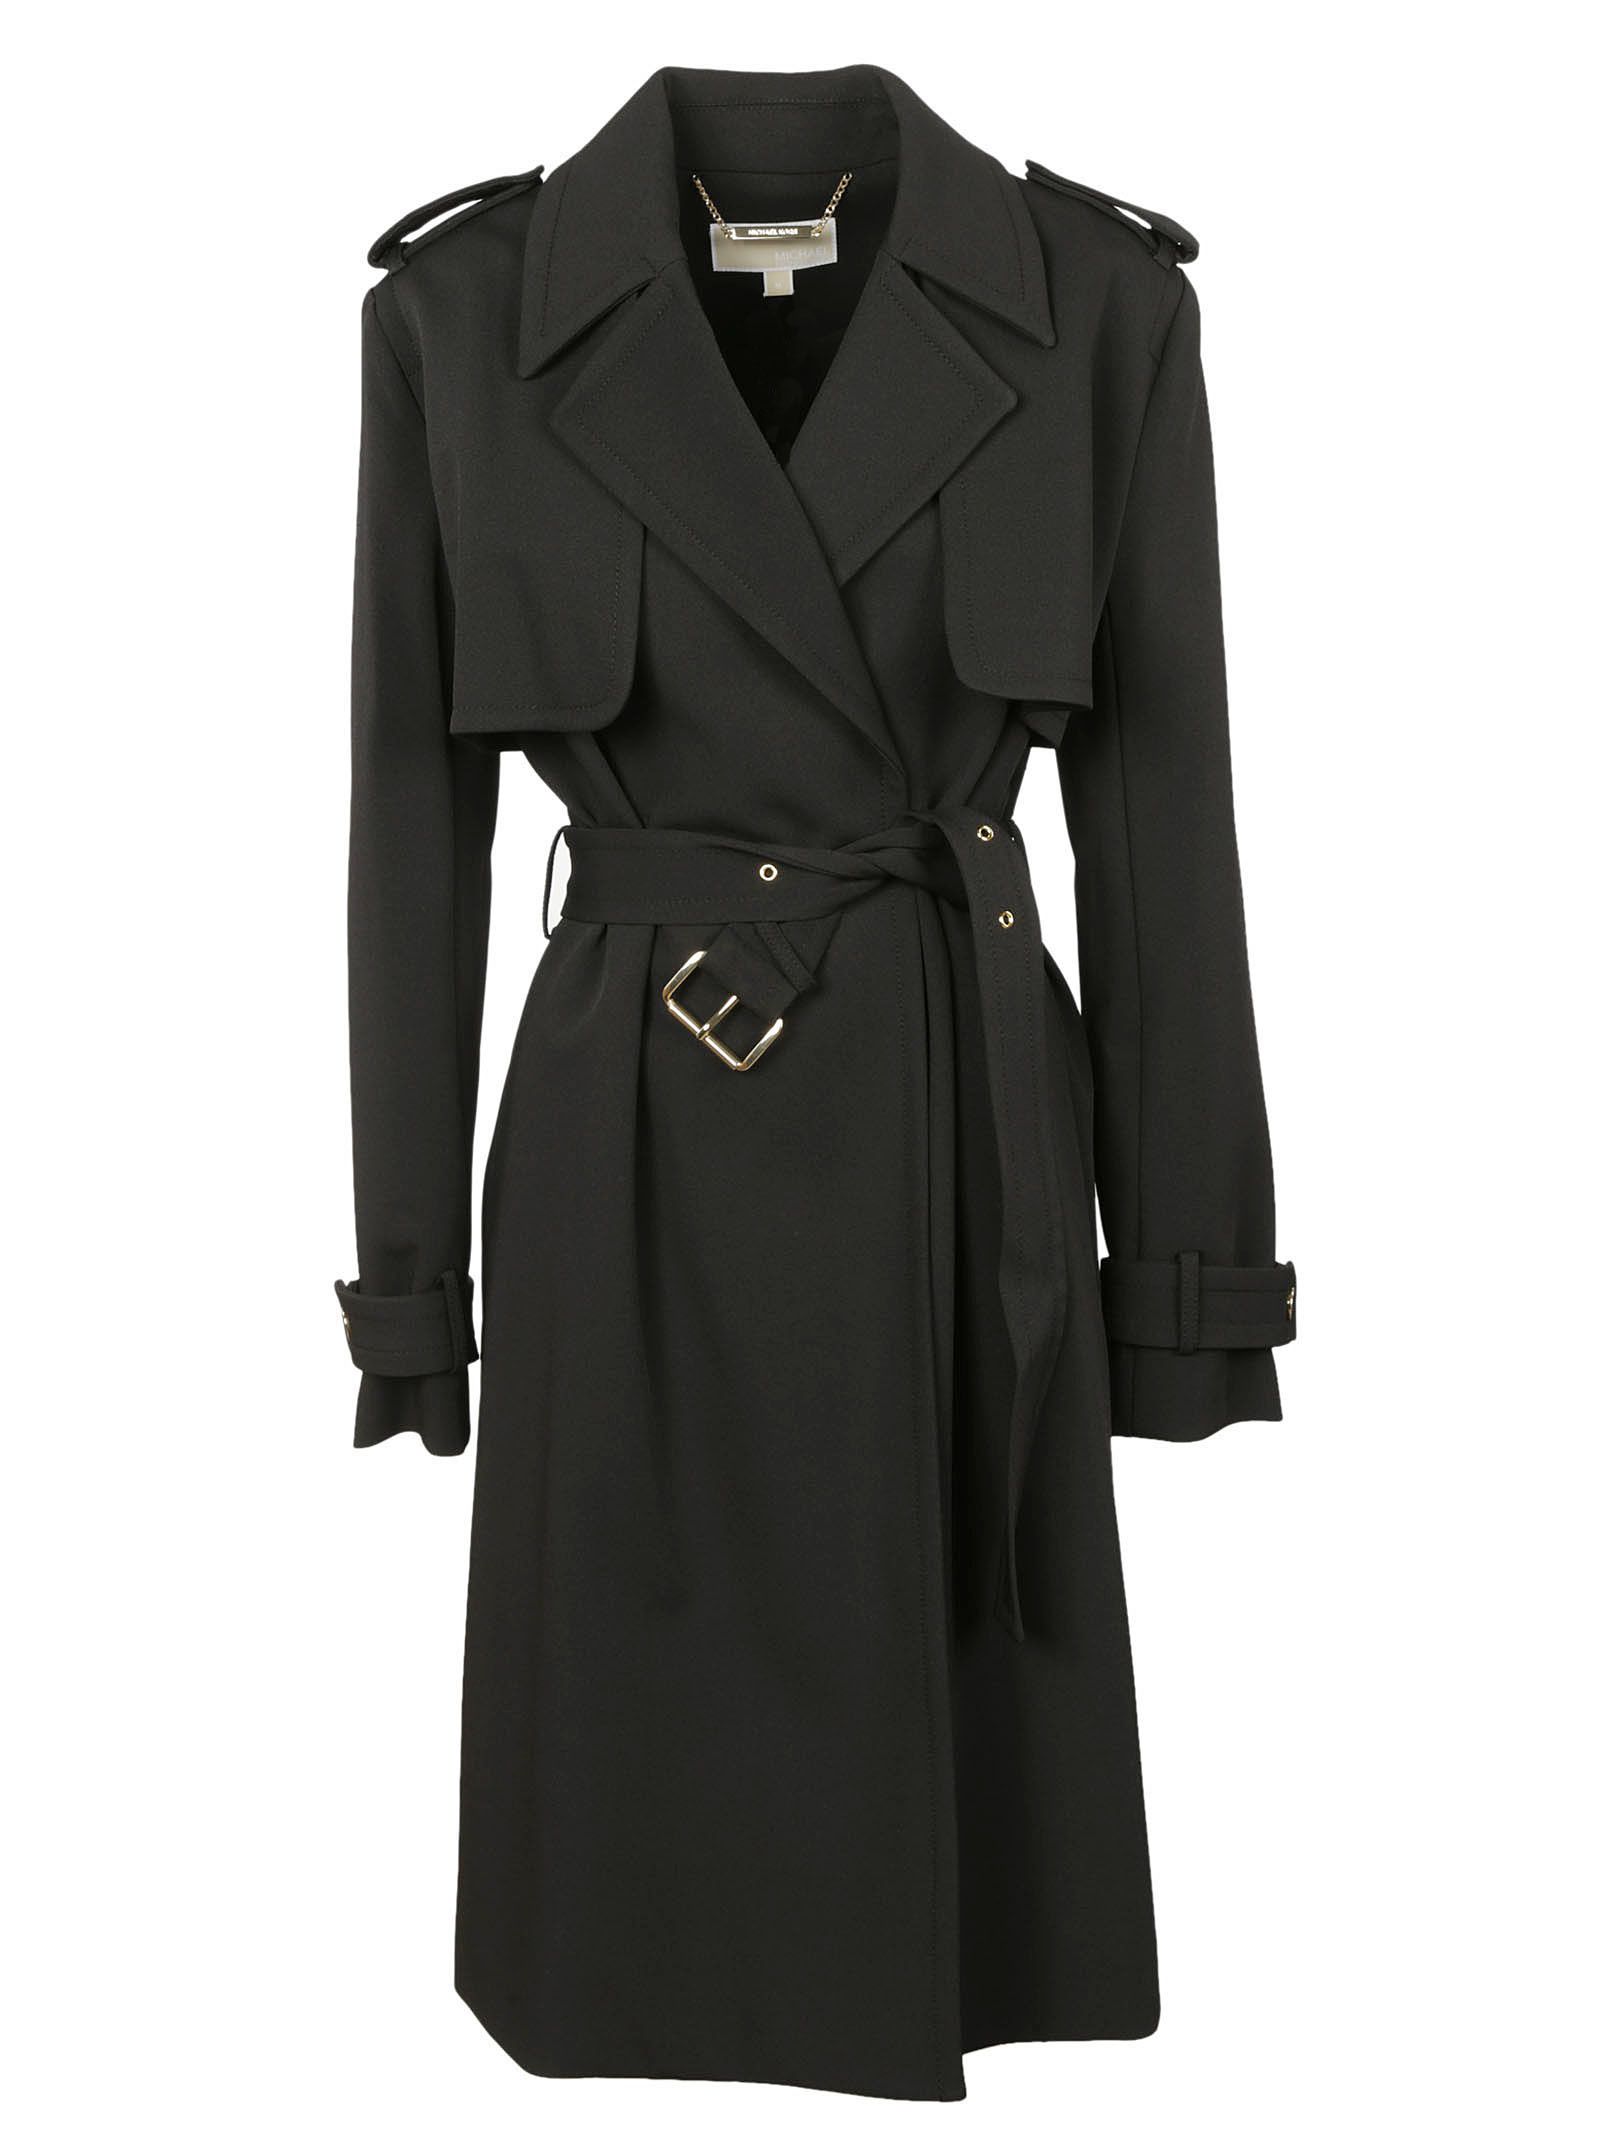 Michael Kors - Michael Kors Classic Trench Coat - Black, Women's ...